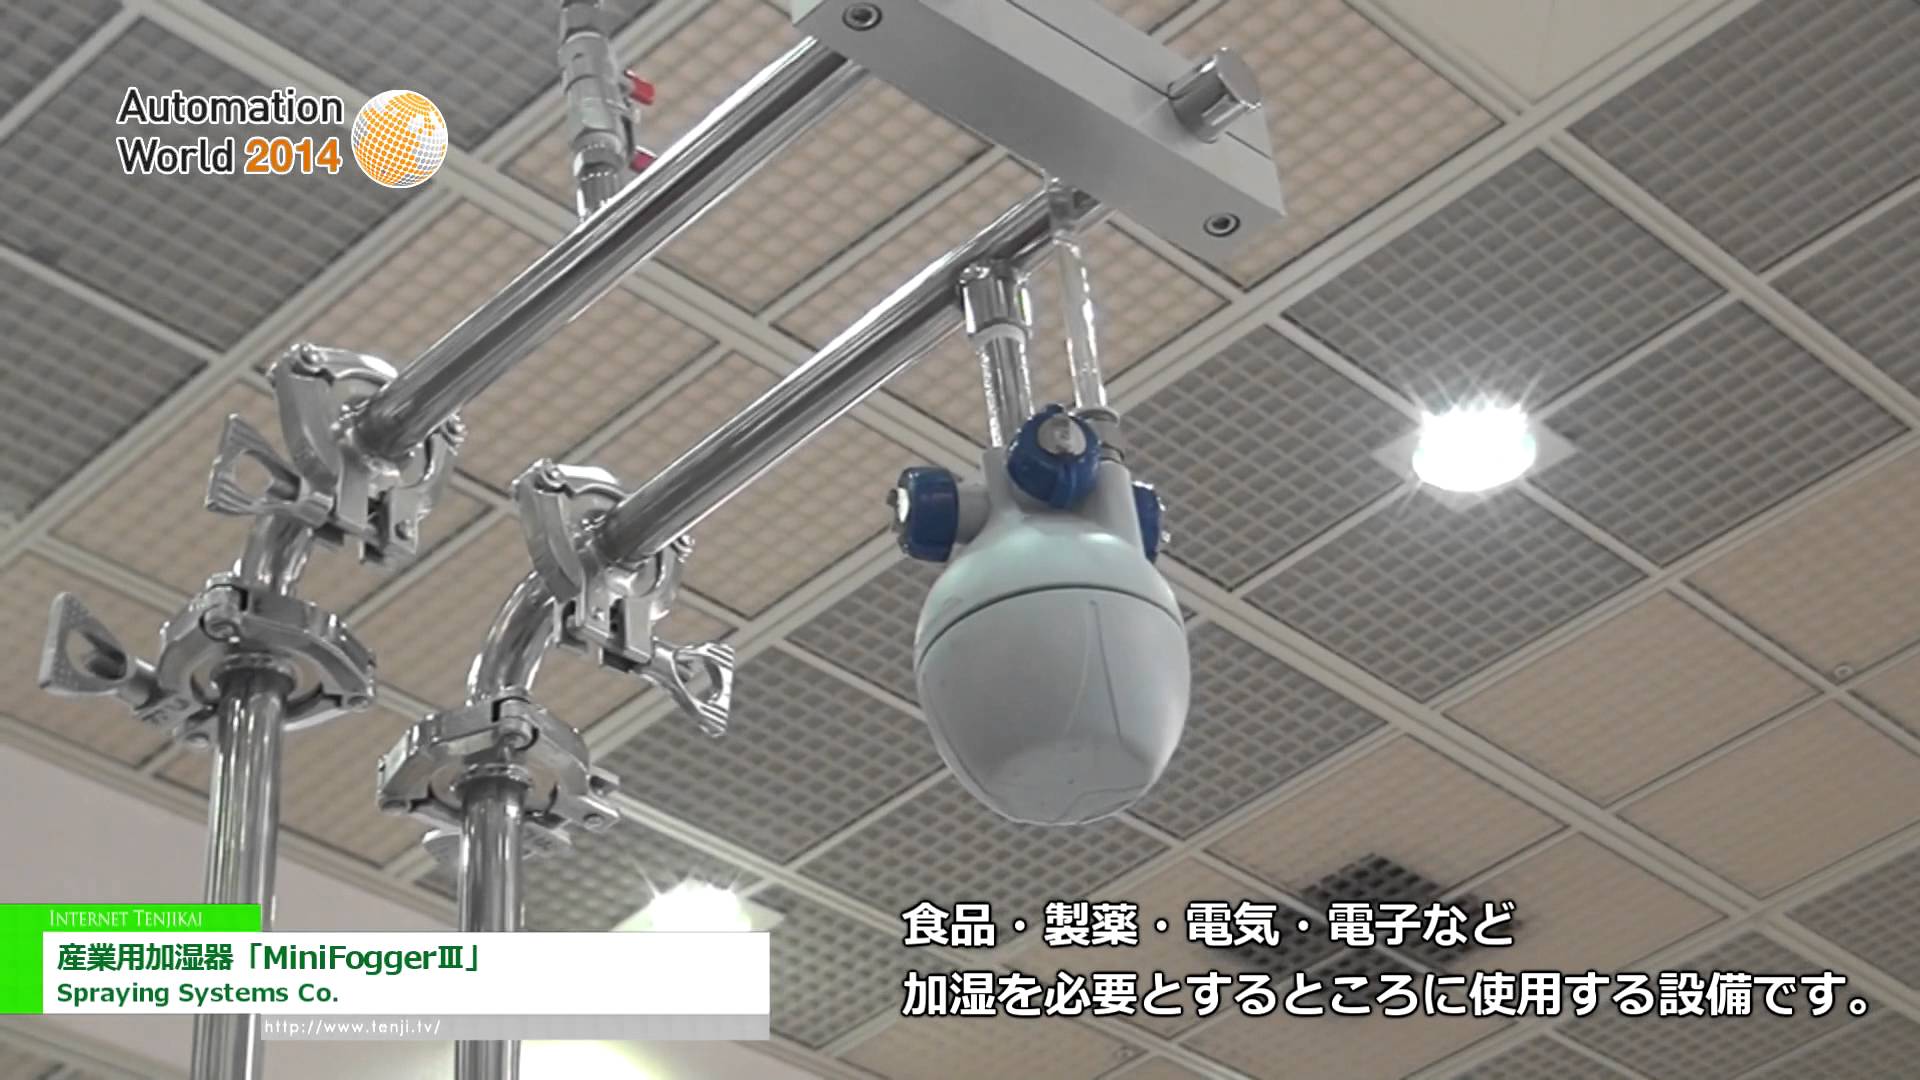 [Automation World 2014] 産業用加湿器「MiniFoggerⅢ」 - Spraying Systems Co.